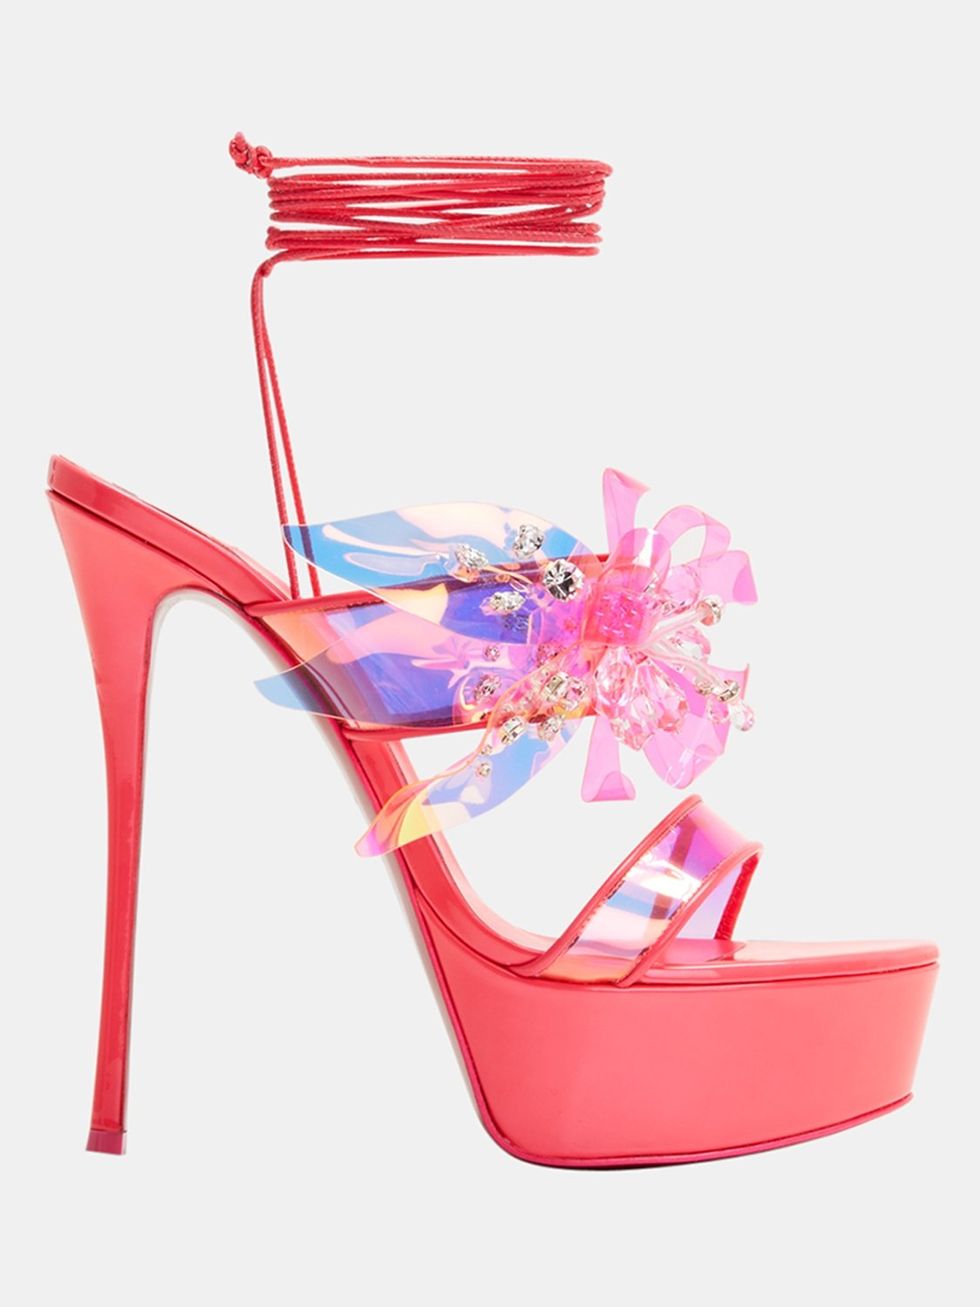 Christian Louboutin, Alyah Iridescent Flower Red Sole Sandals, A La Piscine